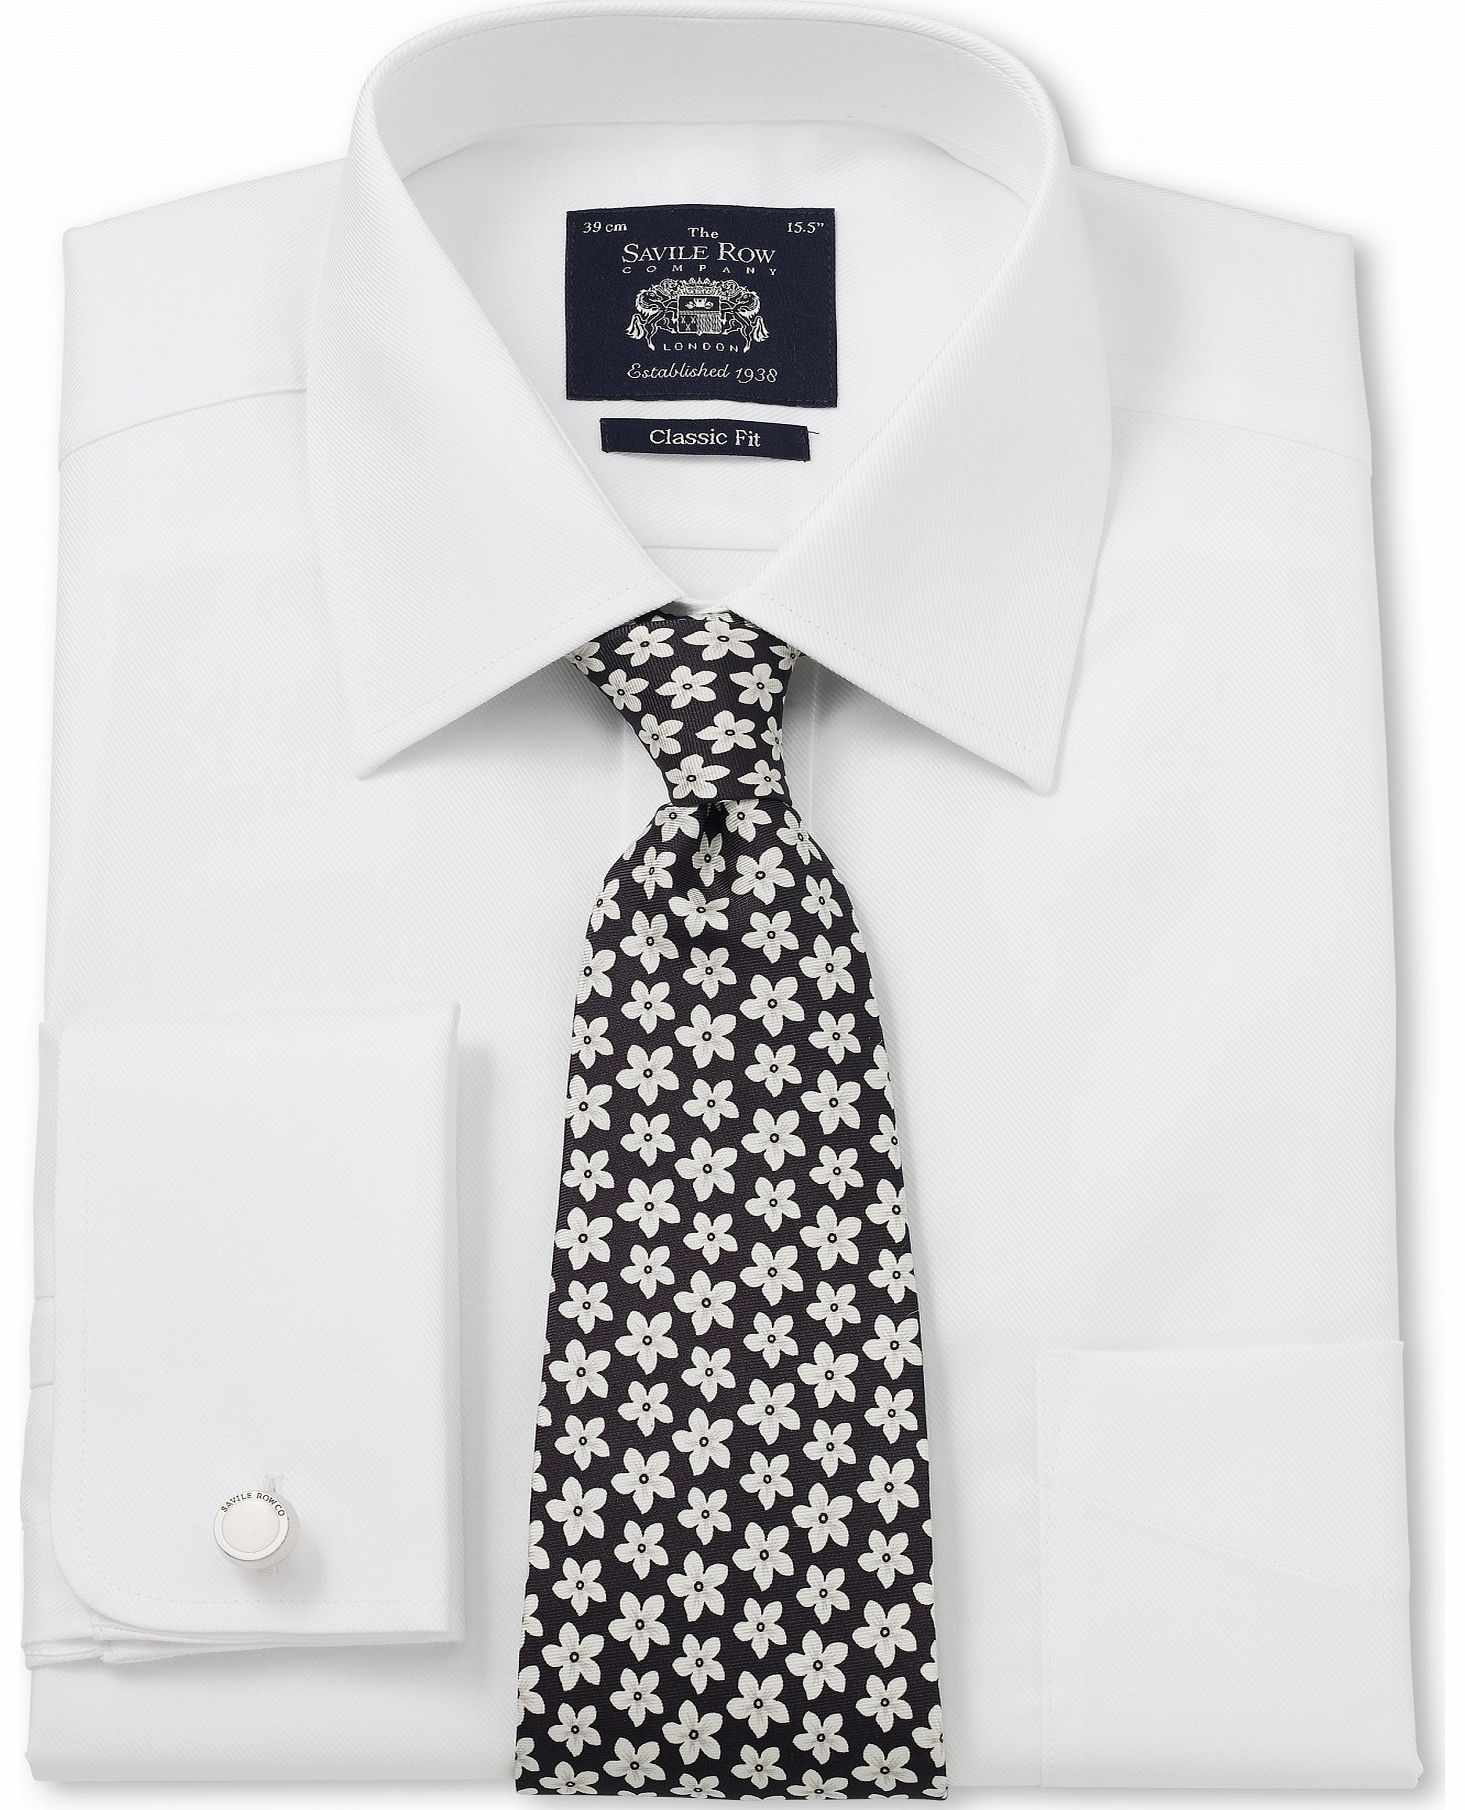 Savile Row Company White Twill Windsor Collar Classic Fit Shirt 19